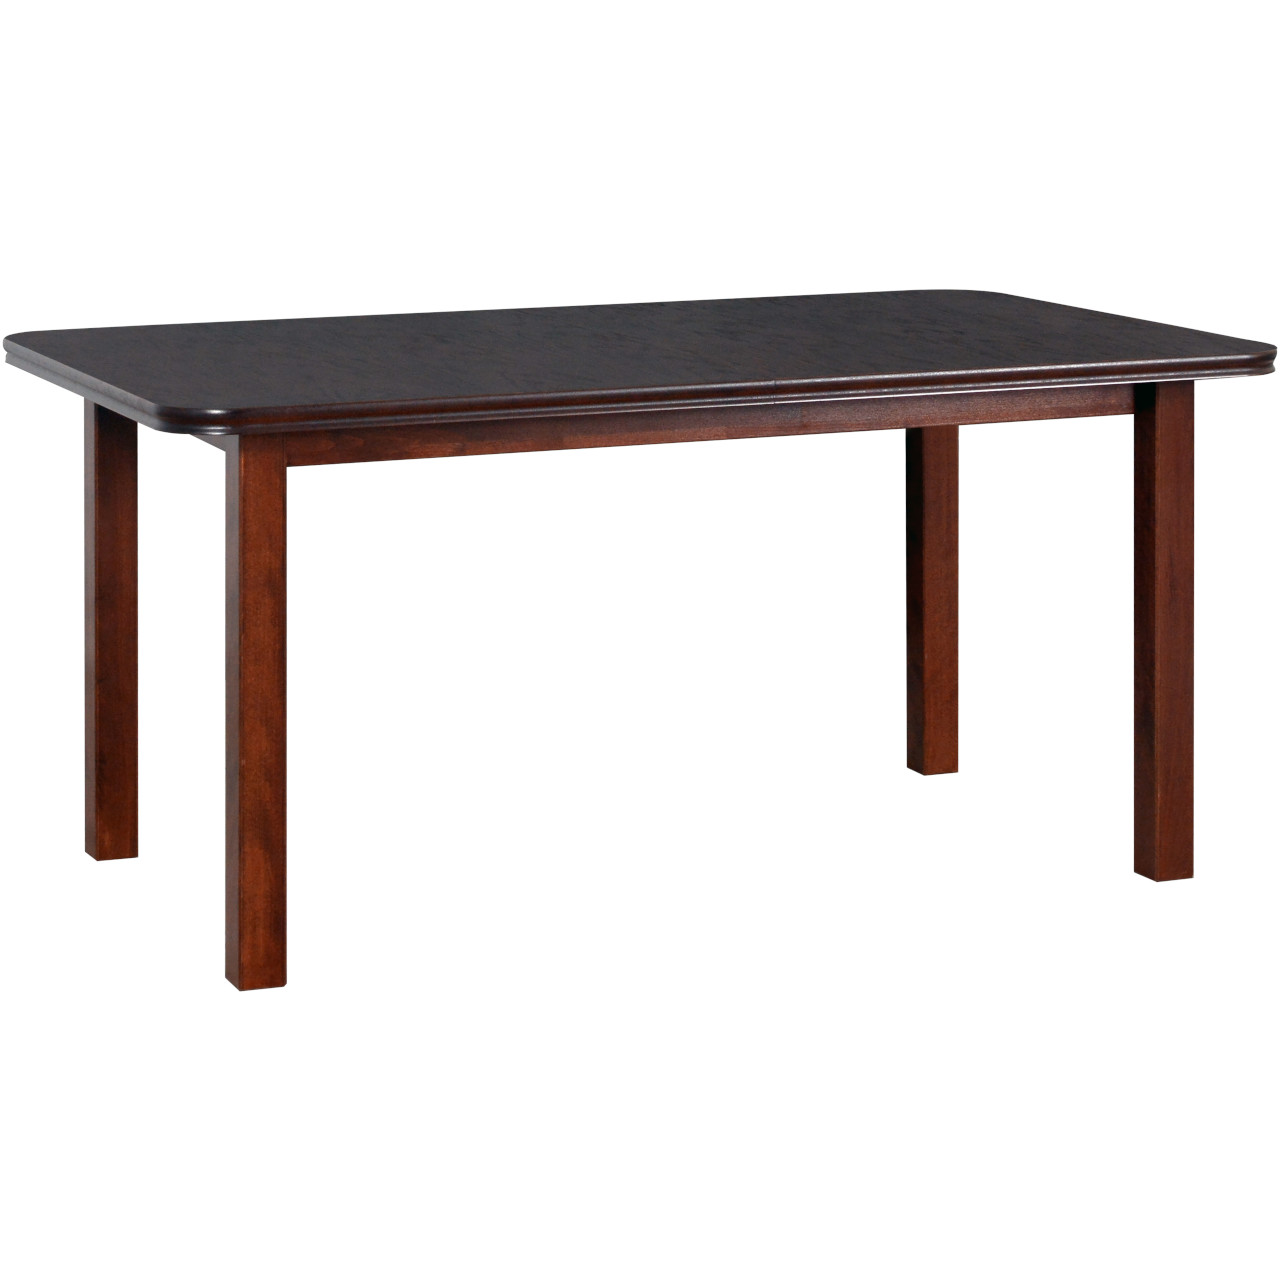 Stôl WENUS 5 90x160/200 orech, dubová dyha